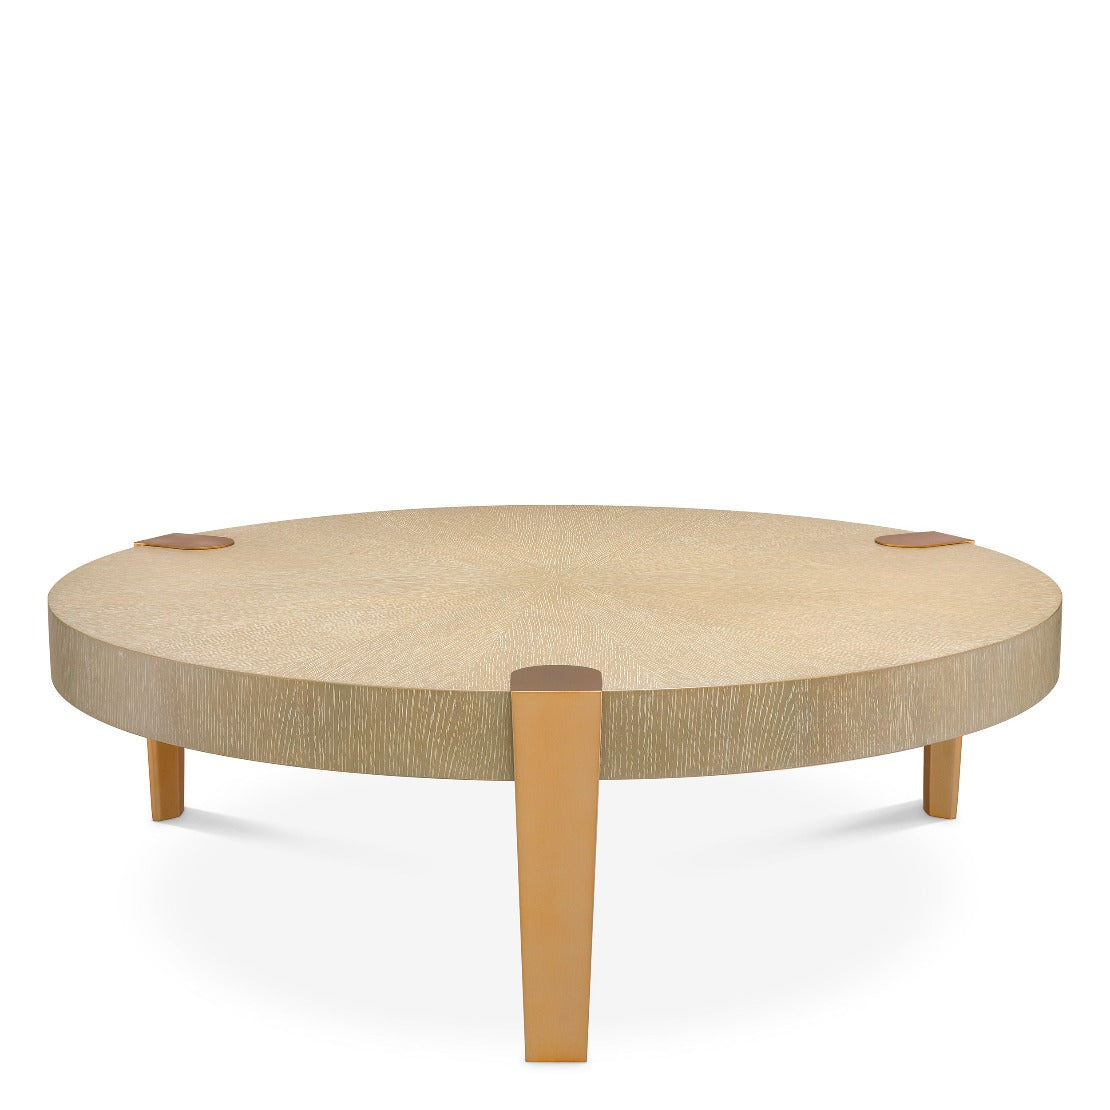 Coffee table Eichholtz Oxnard Washed oak showroom model